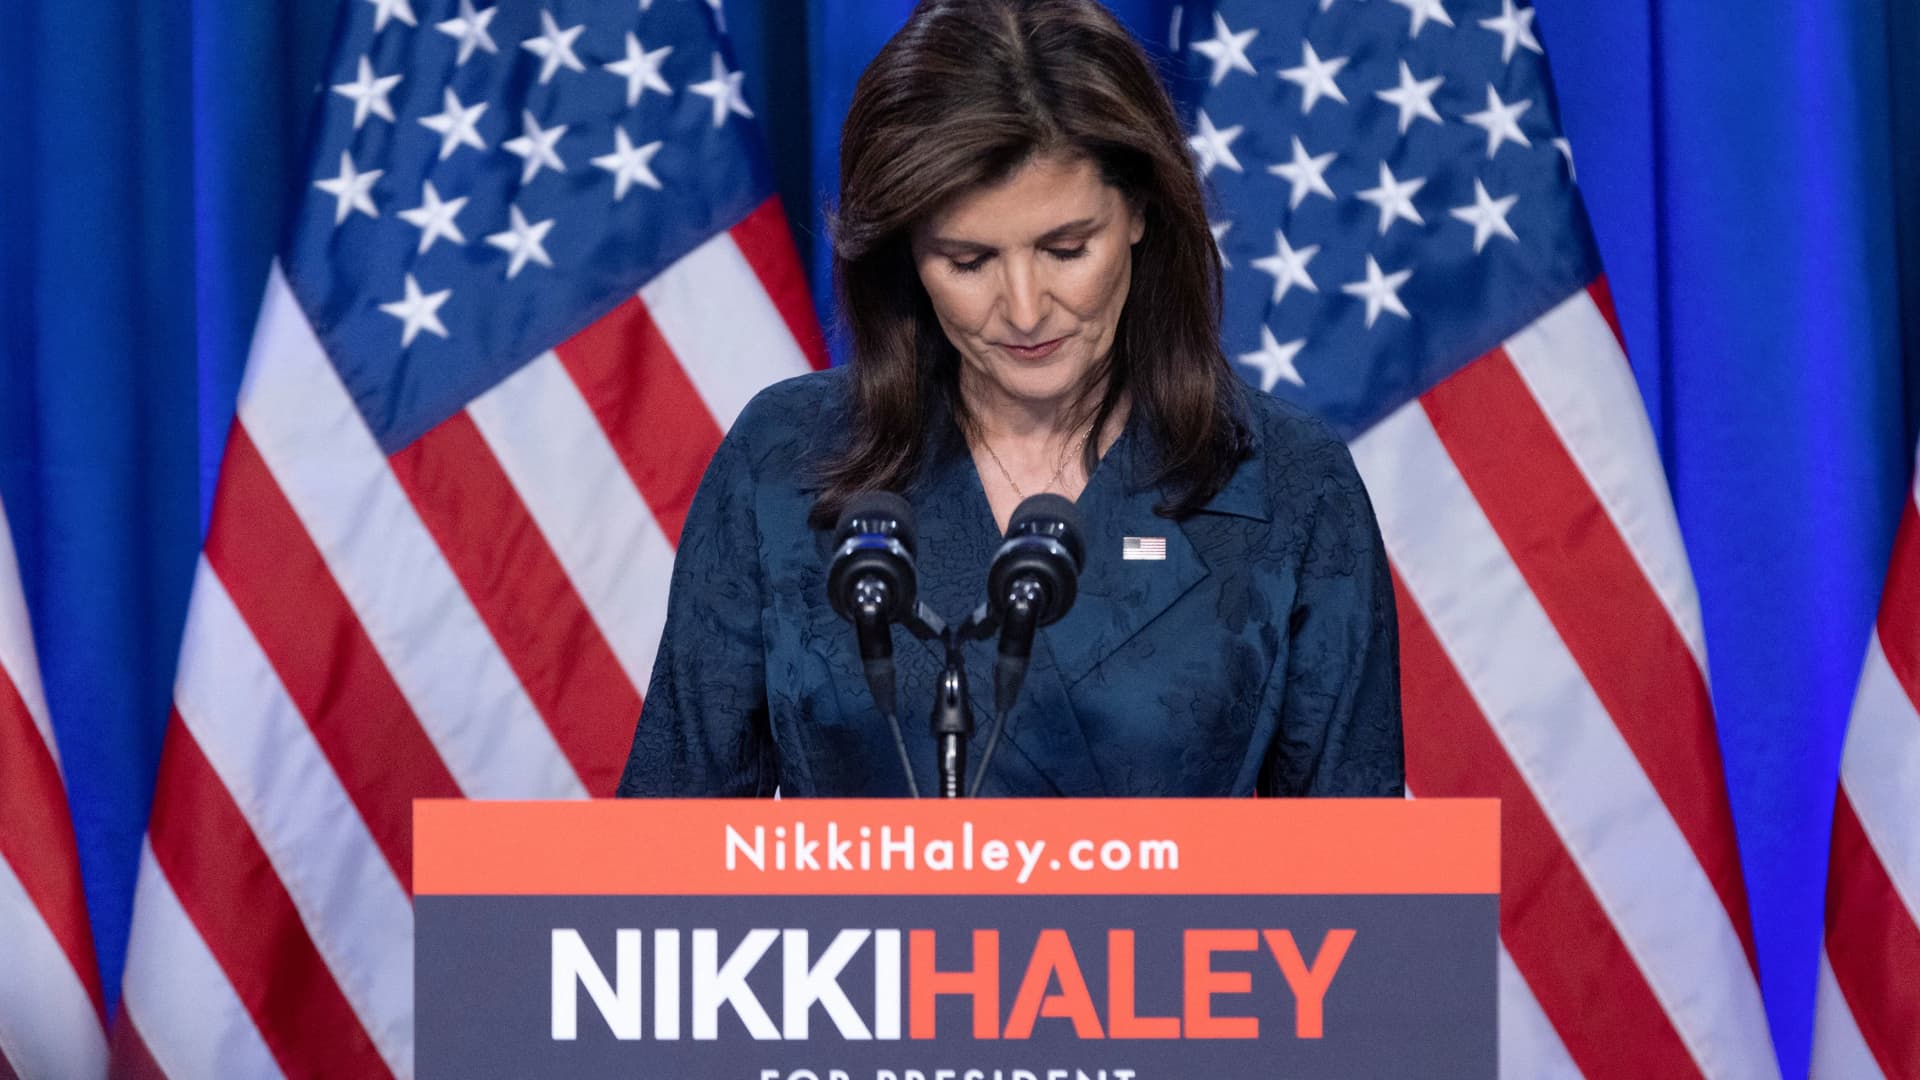 Billionaire-backed Koch network halts Nikki Haley campaign funding after South Carolina loss